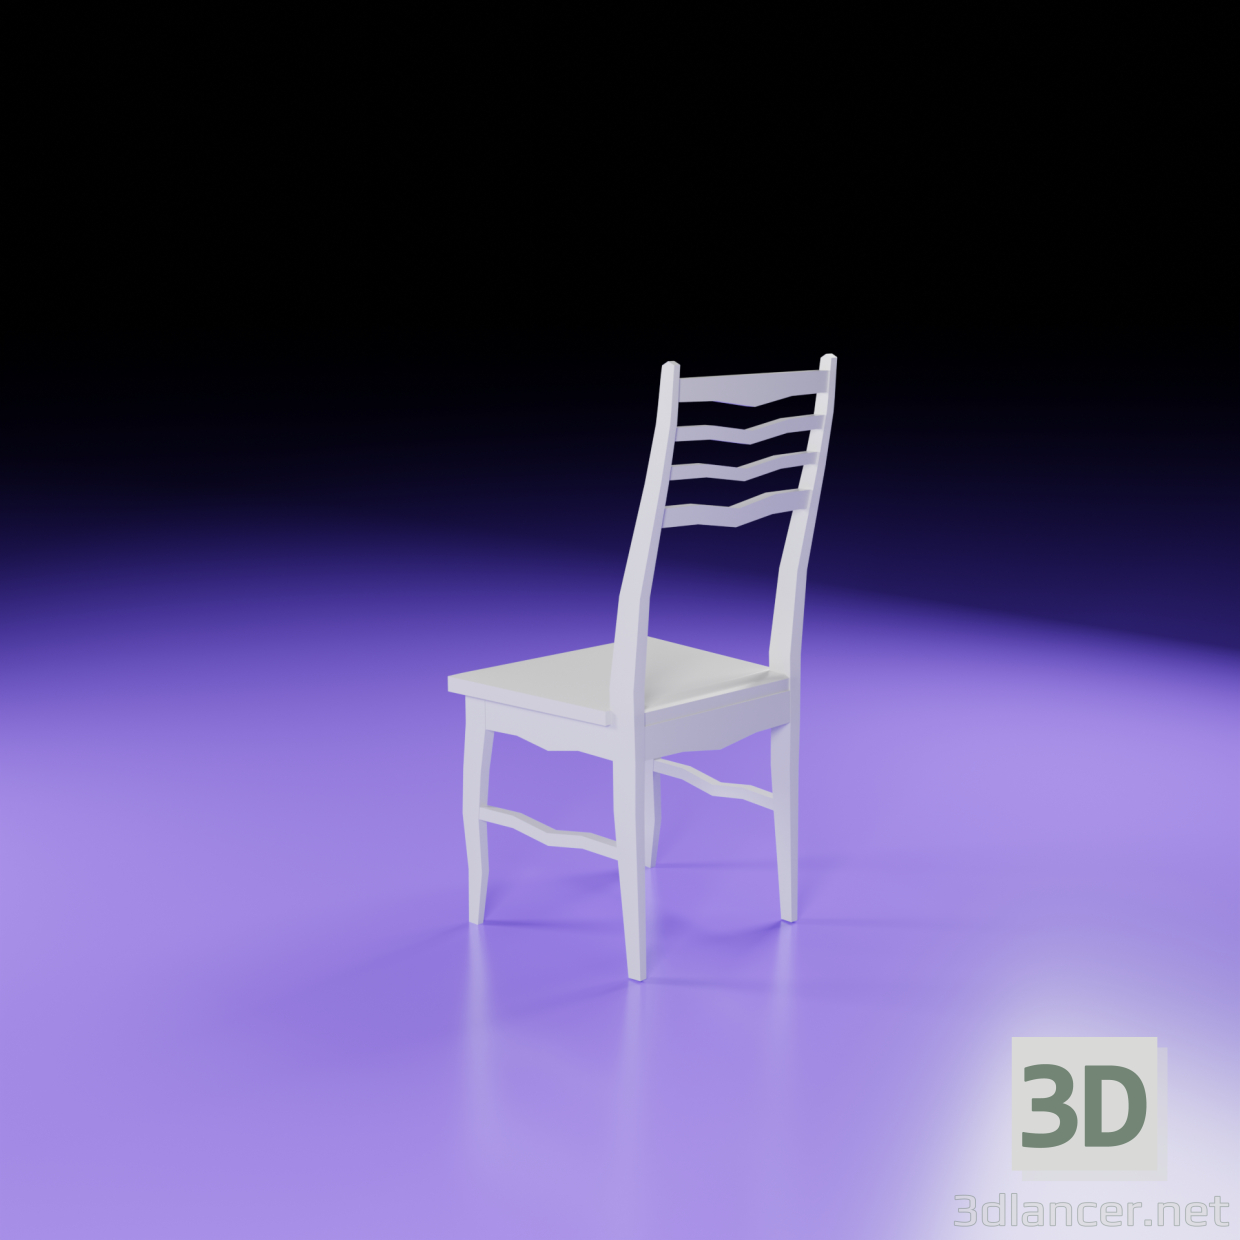 Stuhl Eugen m16 3D-Modell kaufen - Rendern